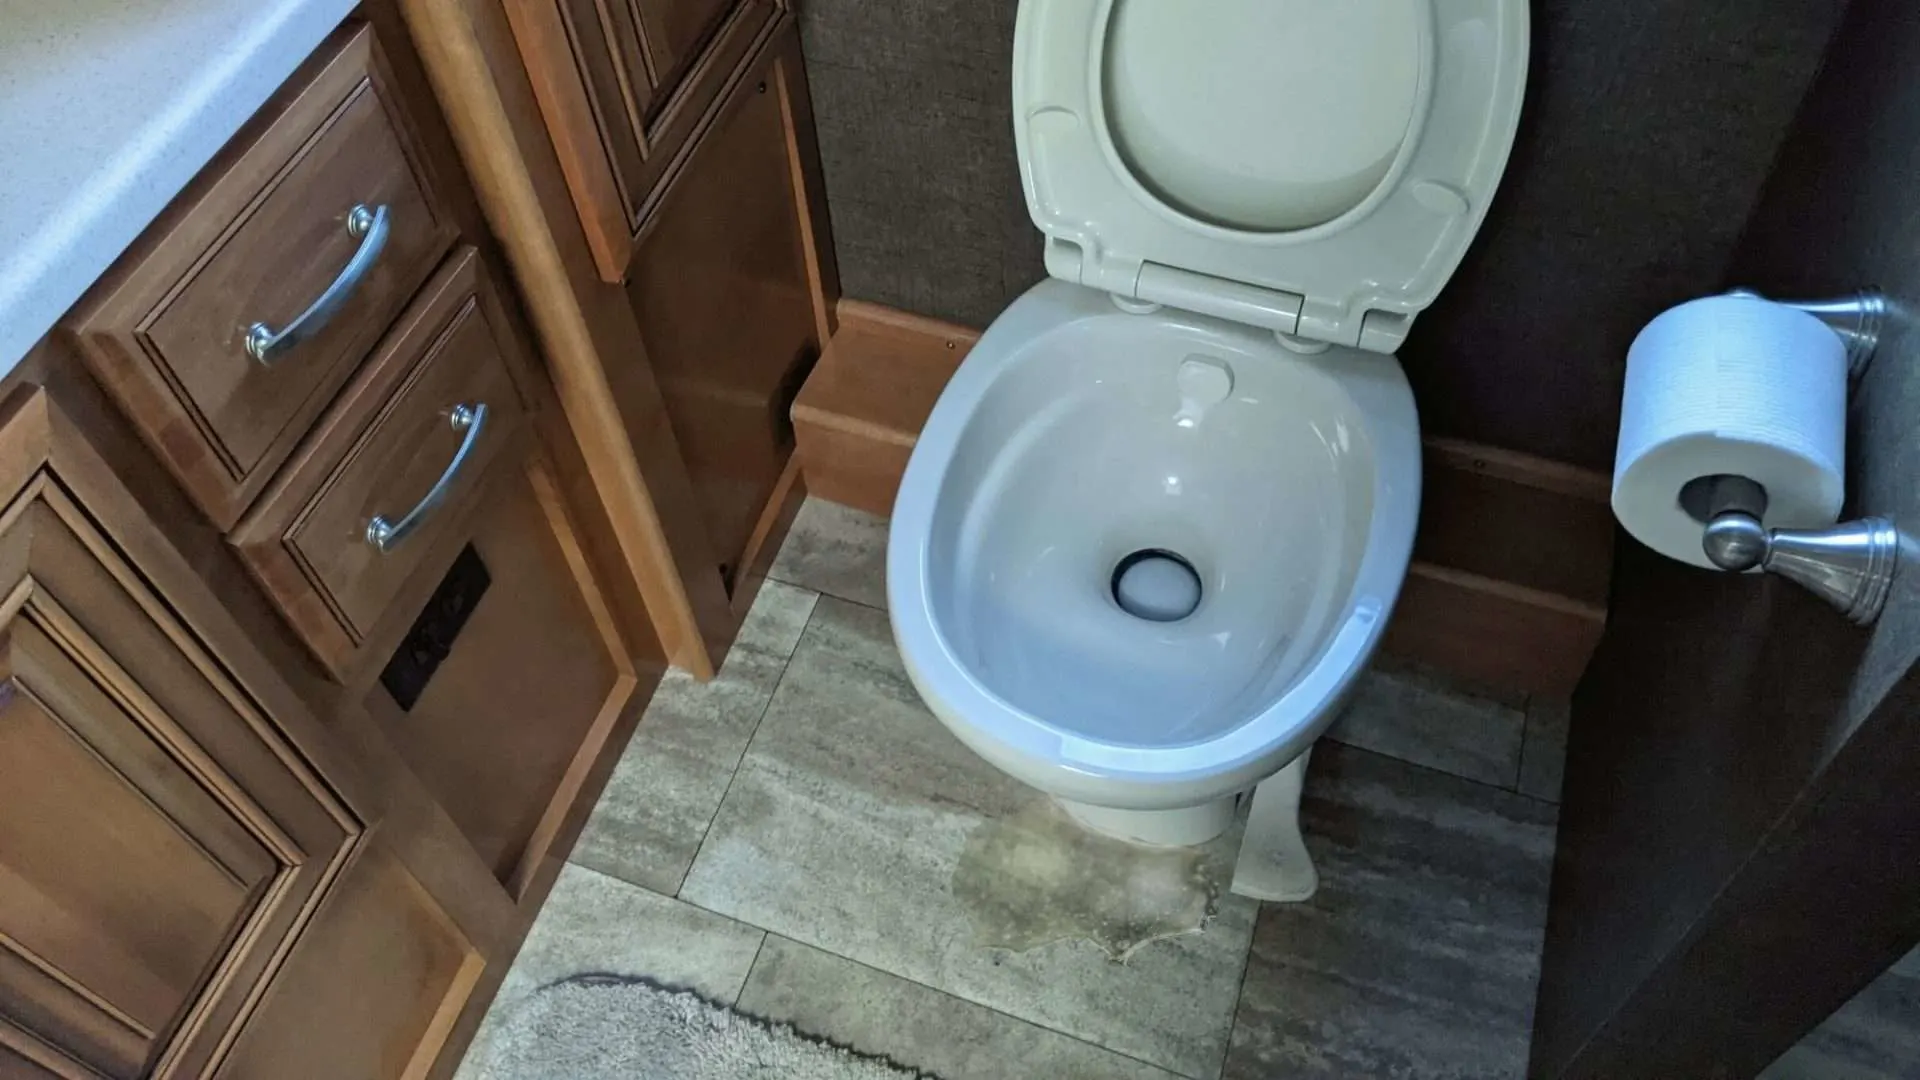 RV toilet leaking at base